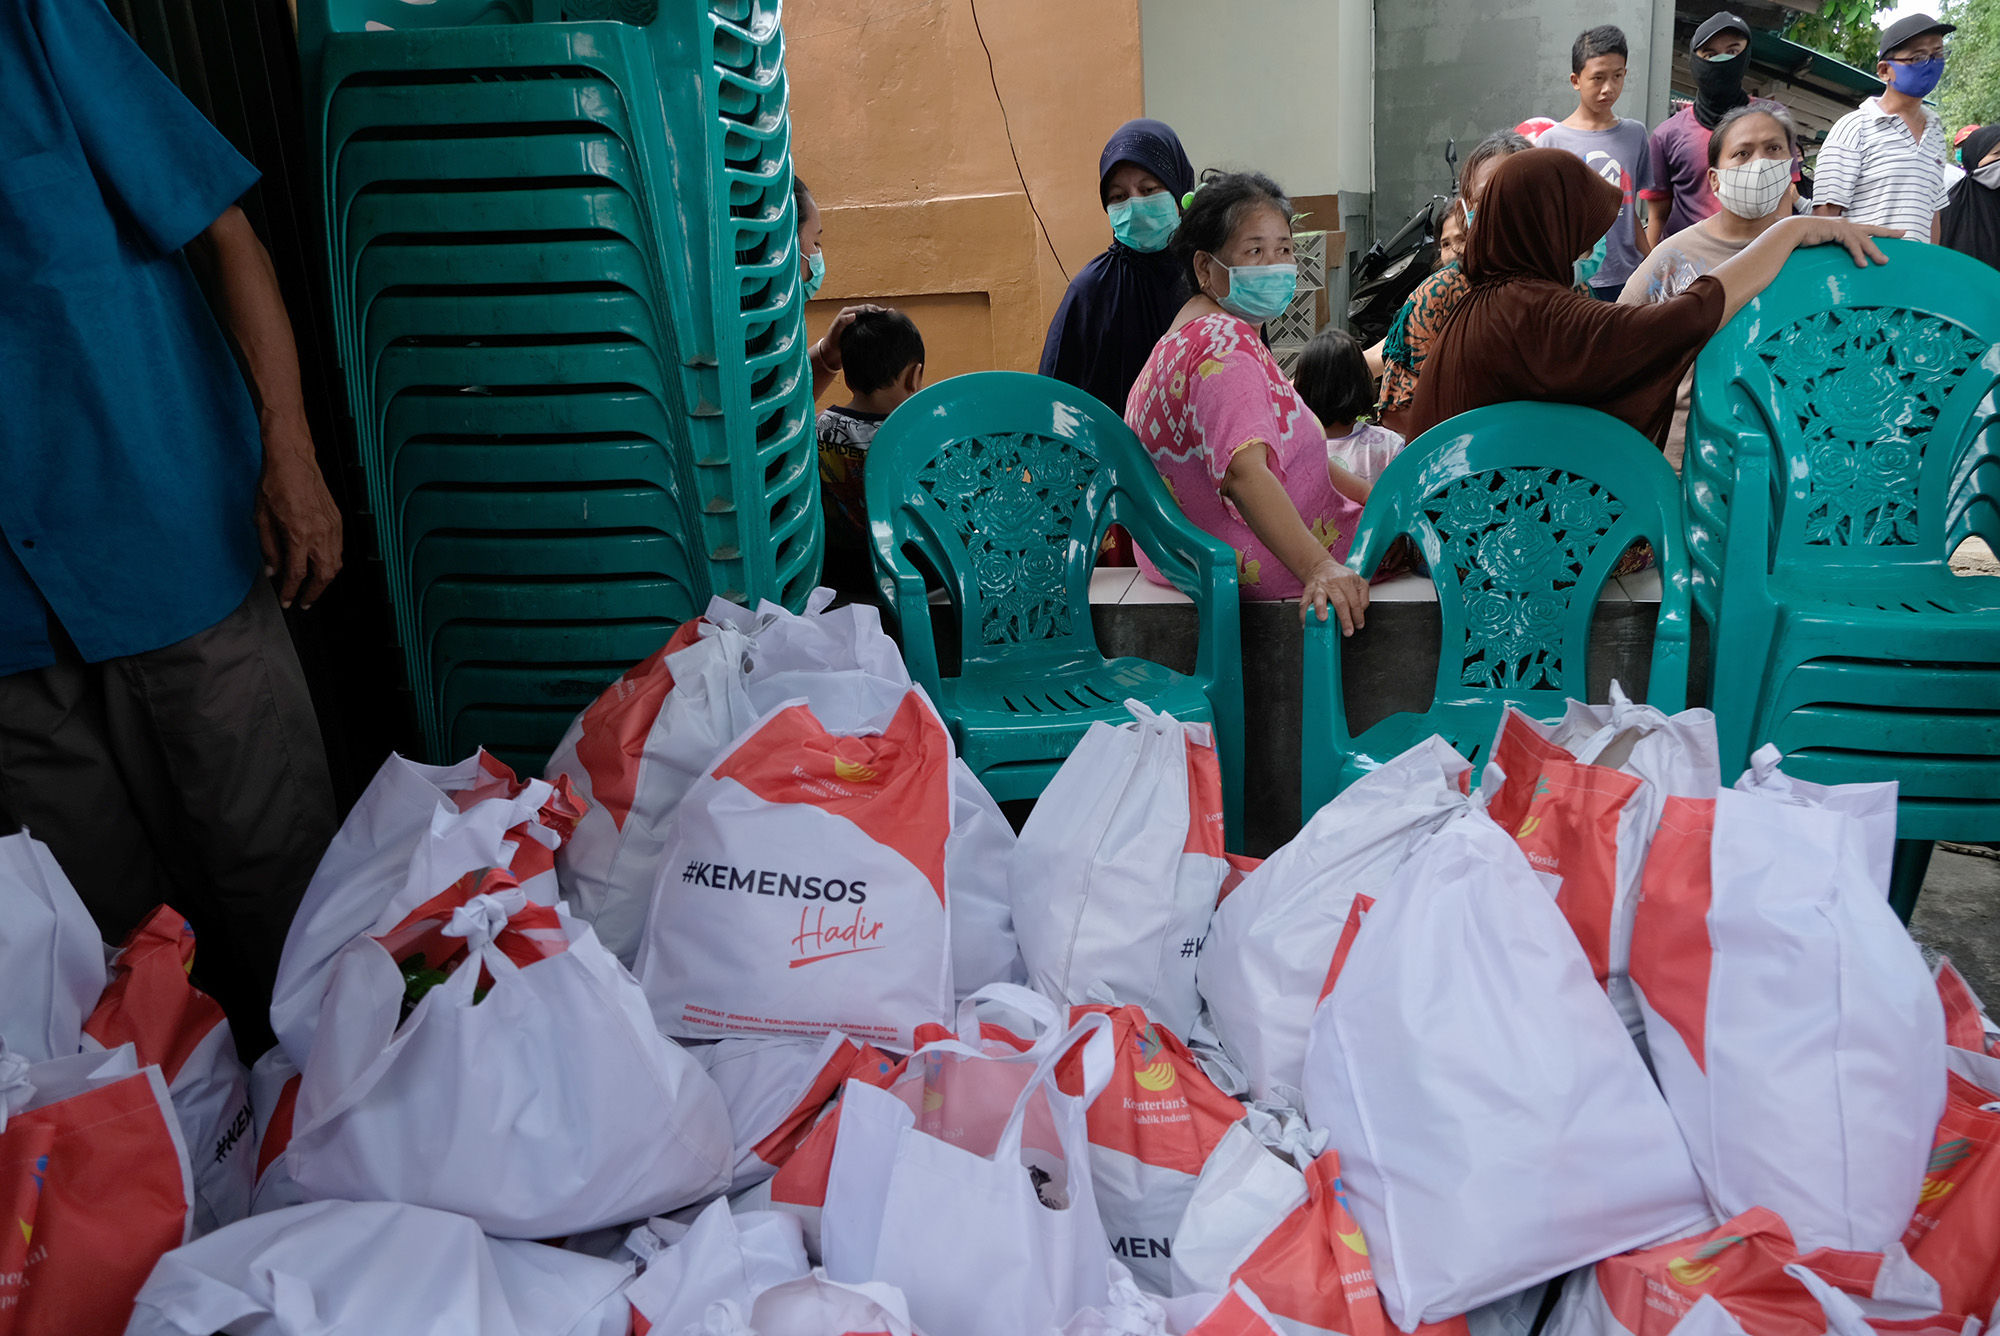 <p>Paket sembako dan makanan siap saji yang akan dibagikan kepada warga Kelurahan Kebon Baru, Tebet, Jakarta Selatan, Rabu (8/4/2020). Kementerian Sosial RI membagikan 200.000 paket sembako dan makanan siap saji kepada para warga terdampak virus Corona (COVID-19) di wilayah zona merah COVID-19 di DKI Jakarta. Pembagian paket sembako dan makanan siap saji ini dimaksudkan agar masyarakat menahan diri untuk tidak mudik yang dikhawatirkan berpotensi menyebarkan COVID-19 kepada lebih banyak orang. Foto: Ismail Pohan/Trenasia</p>
